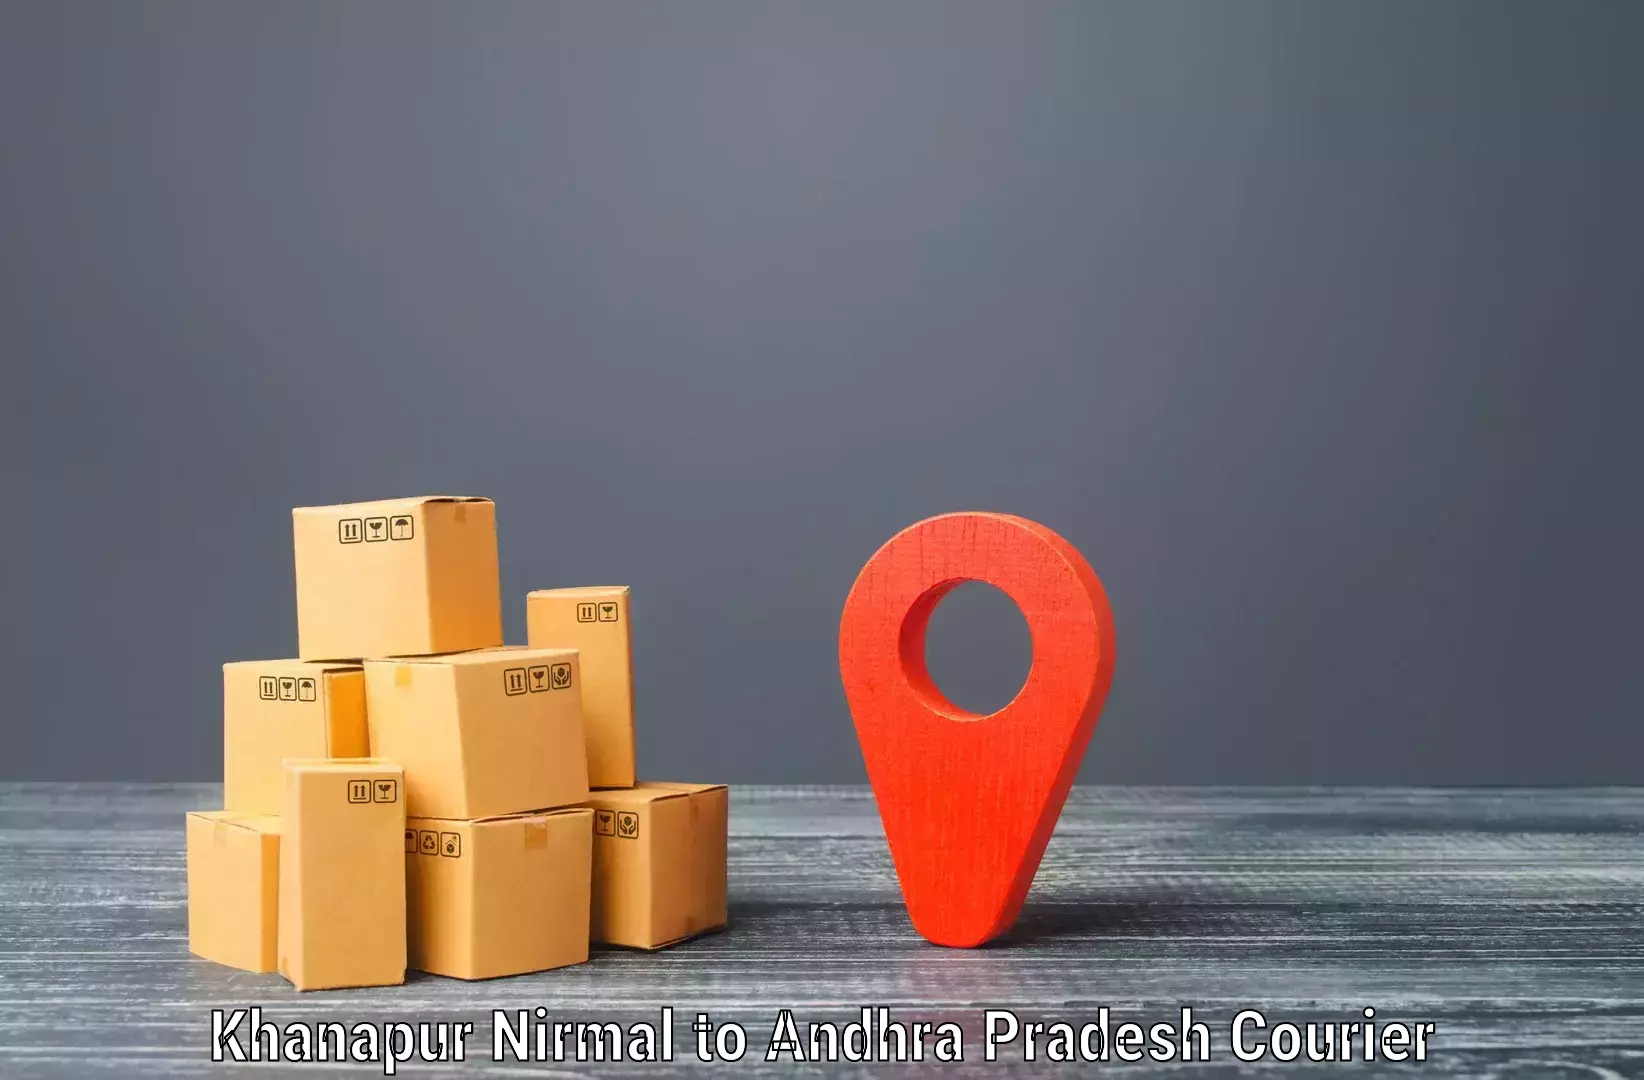 State-of-the-art courier technology Khanapur Nirmal to Koyyuru